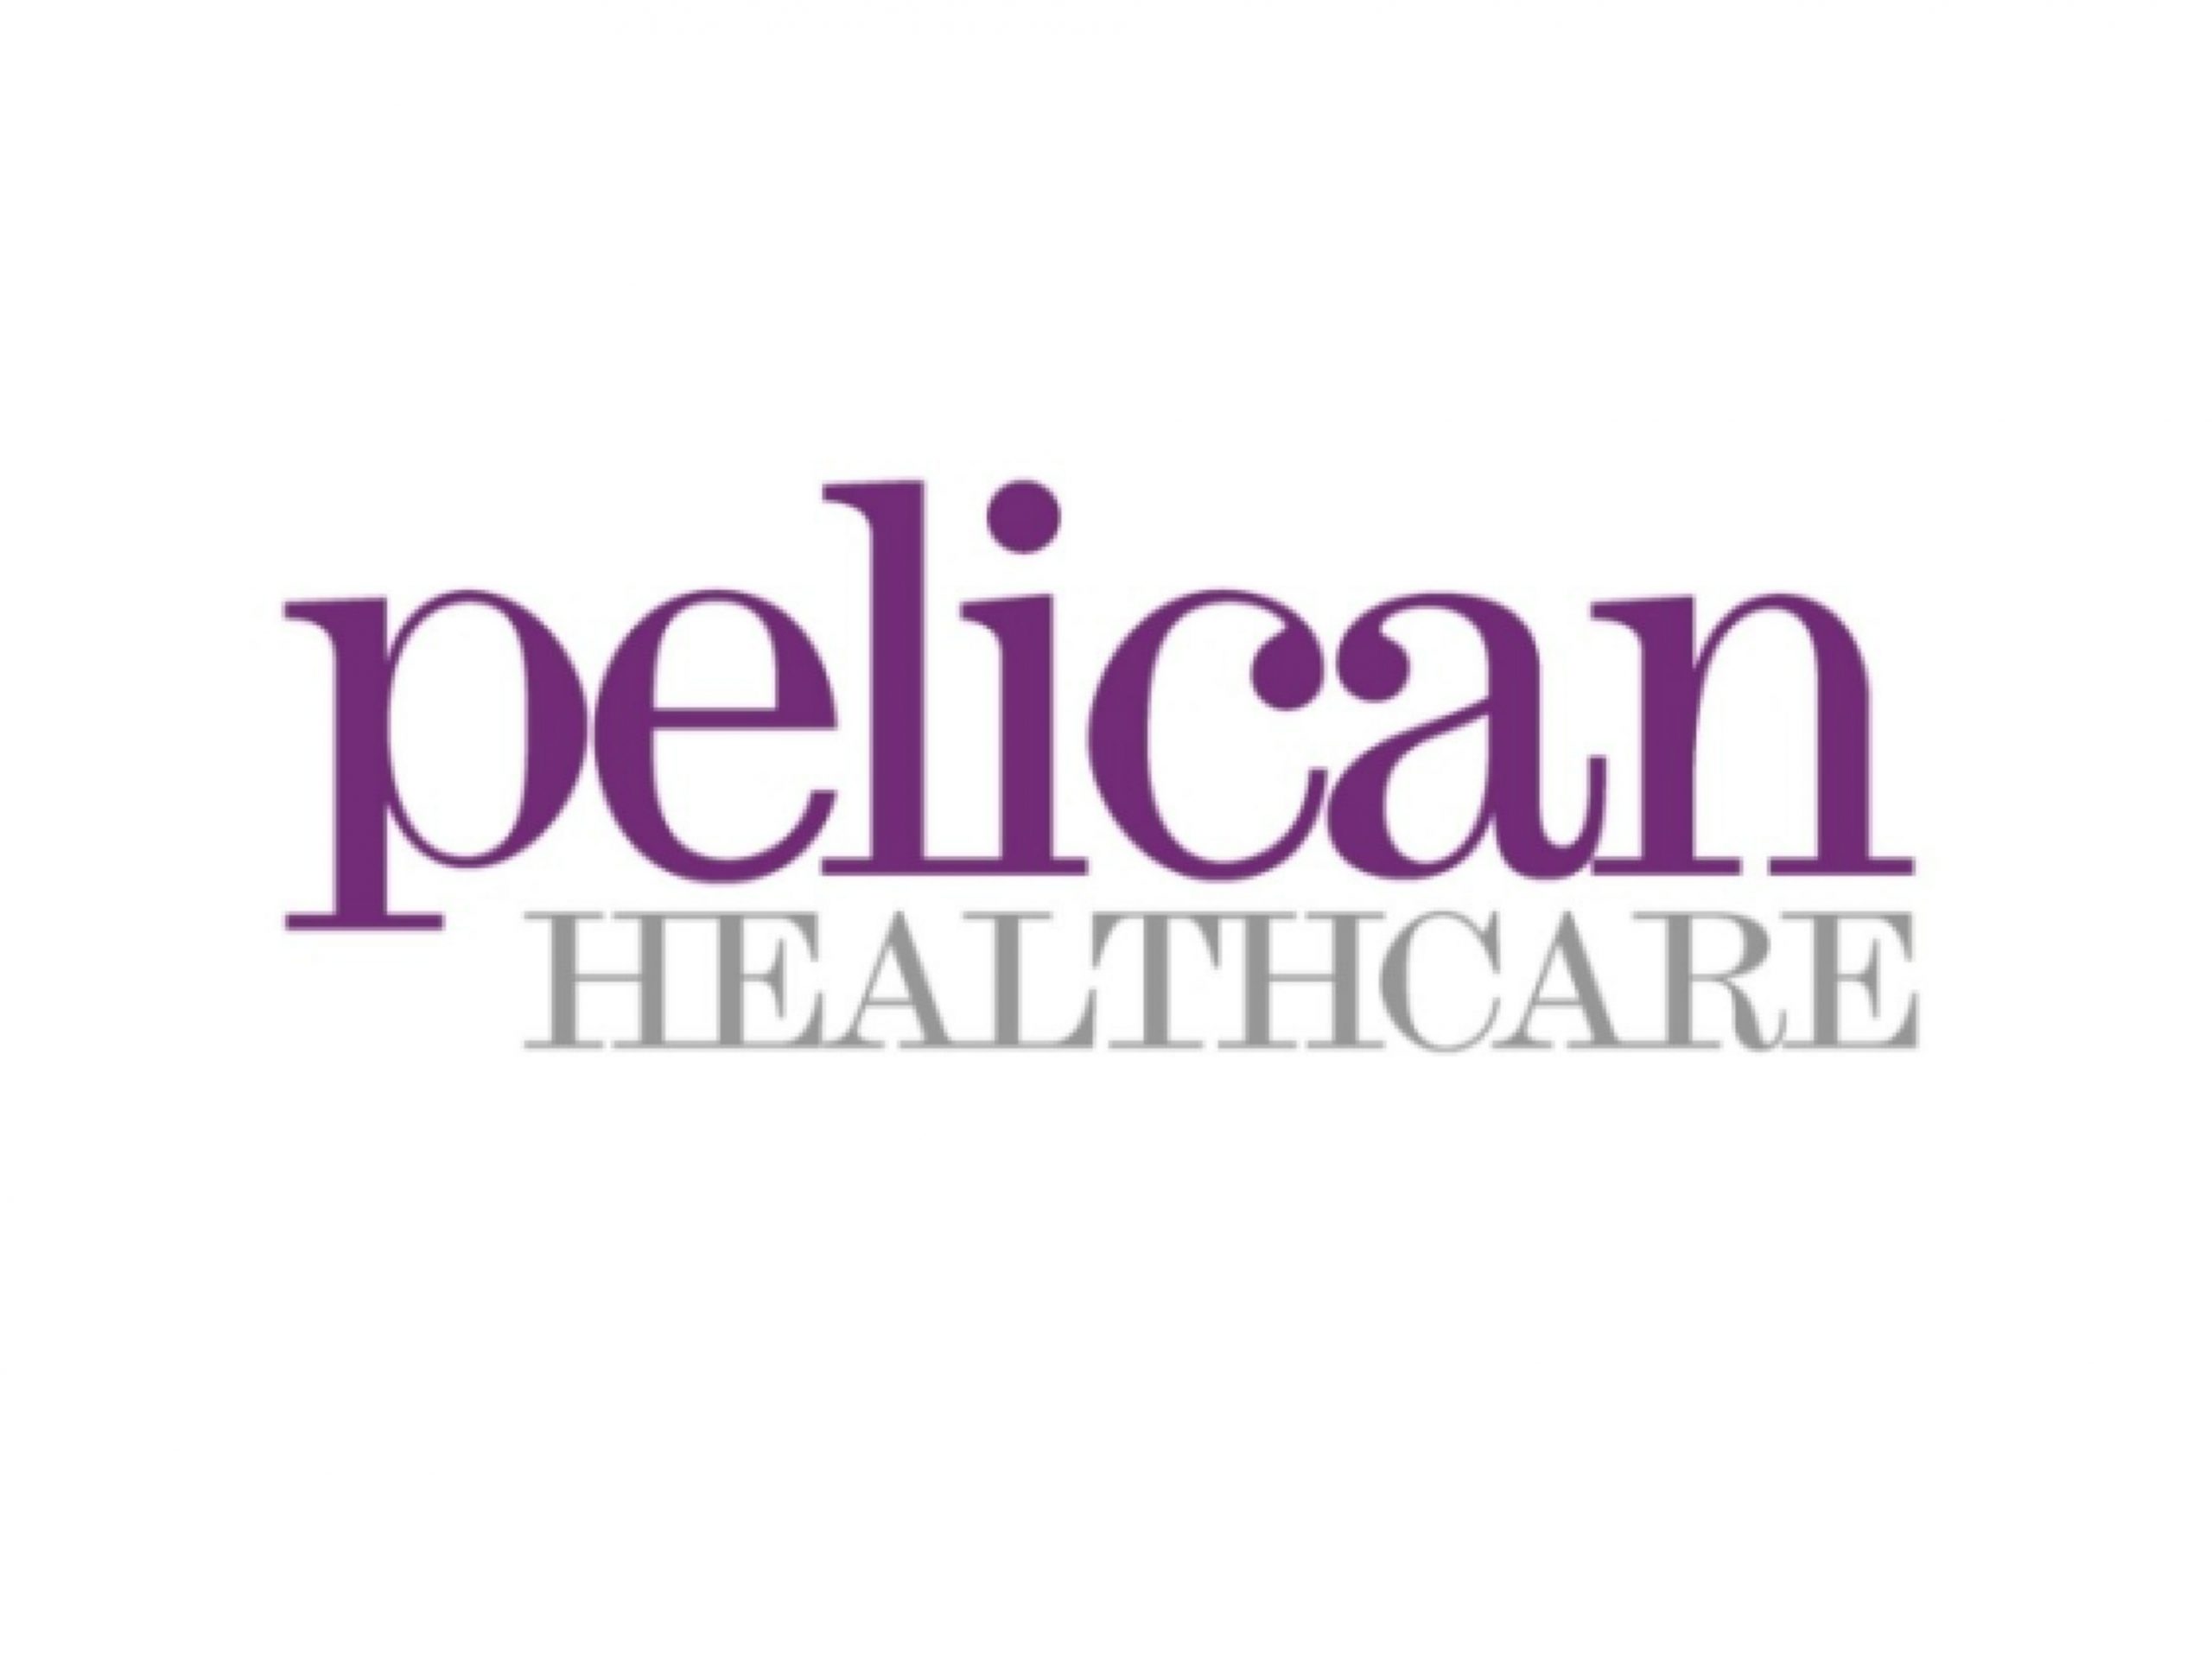 Pelican Healthcare Hits Manufacturing High Despite Covid-19